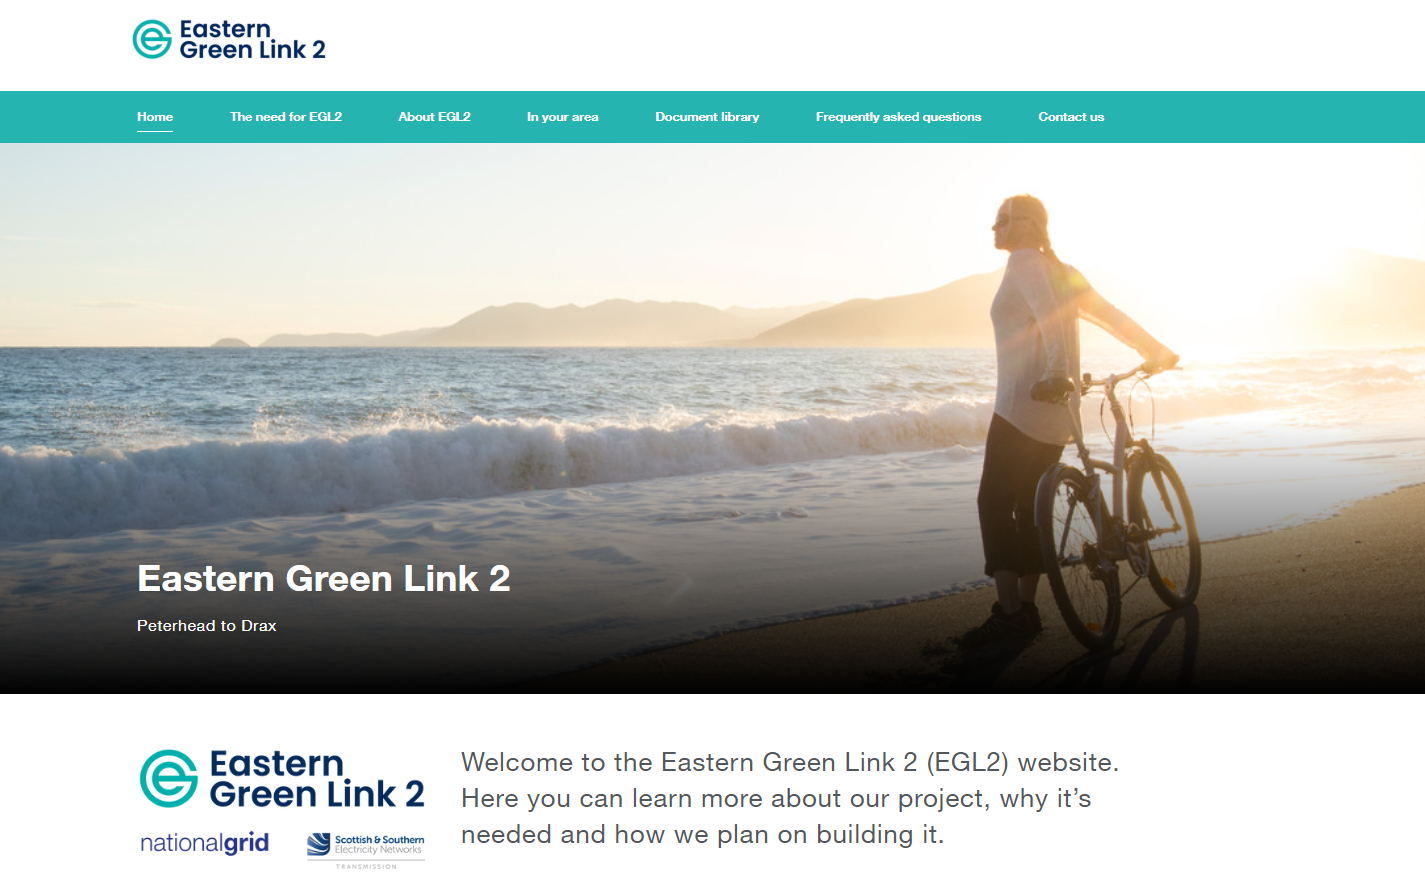 A screenshot of the Eastern Green Link 2 website.